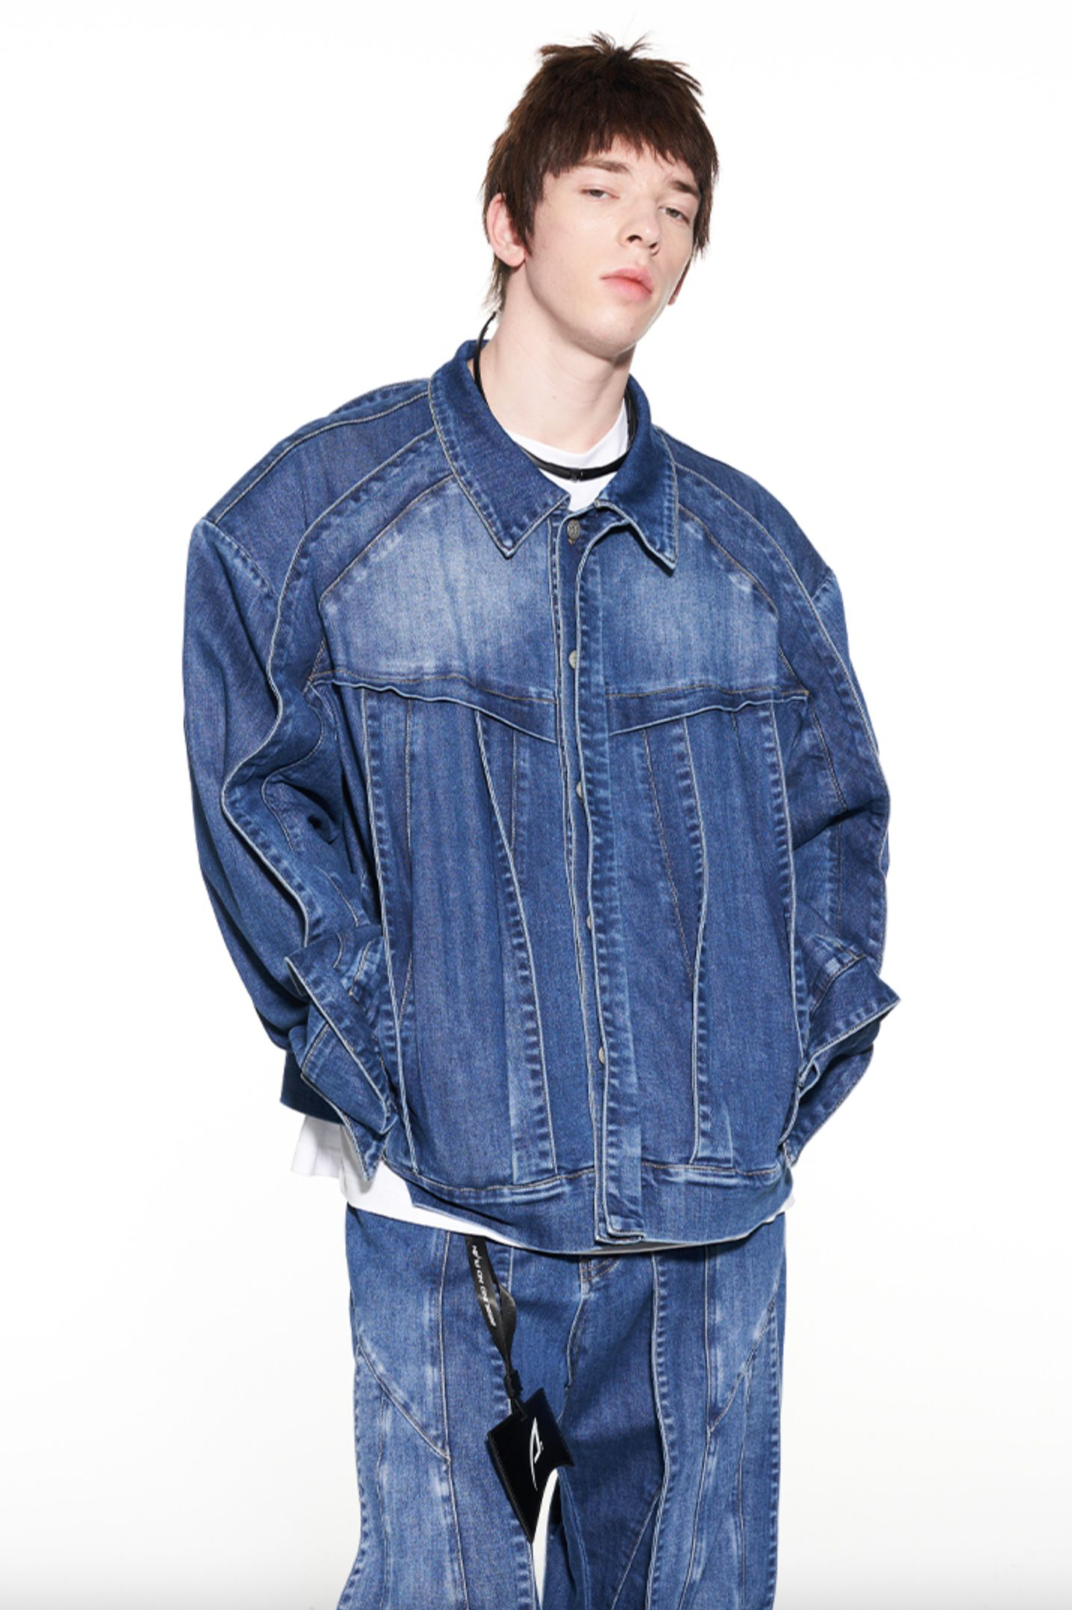 FIVETOSEVEN Spring Men's Denim Jacket Washed Workwear Jacket Casual Loose  Tops Bomber Street Trend Coat NJ140 blue XS at Amazon Men's Clothing store